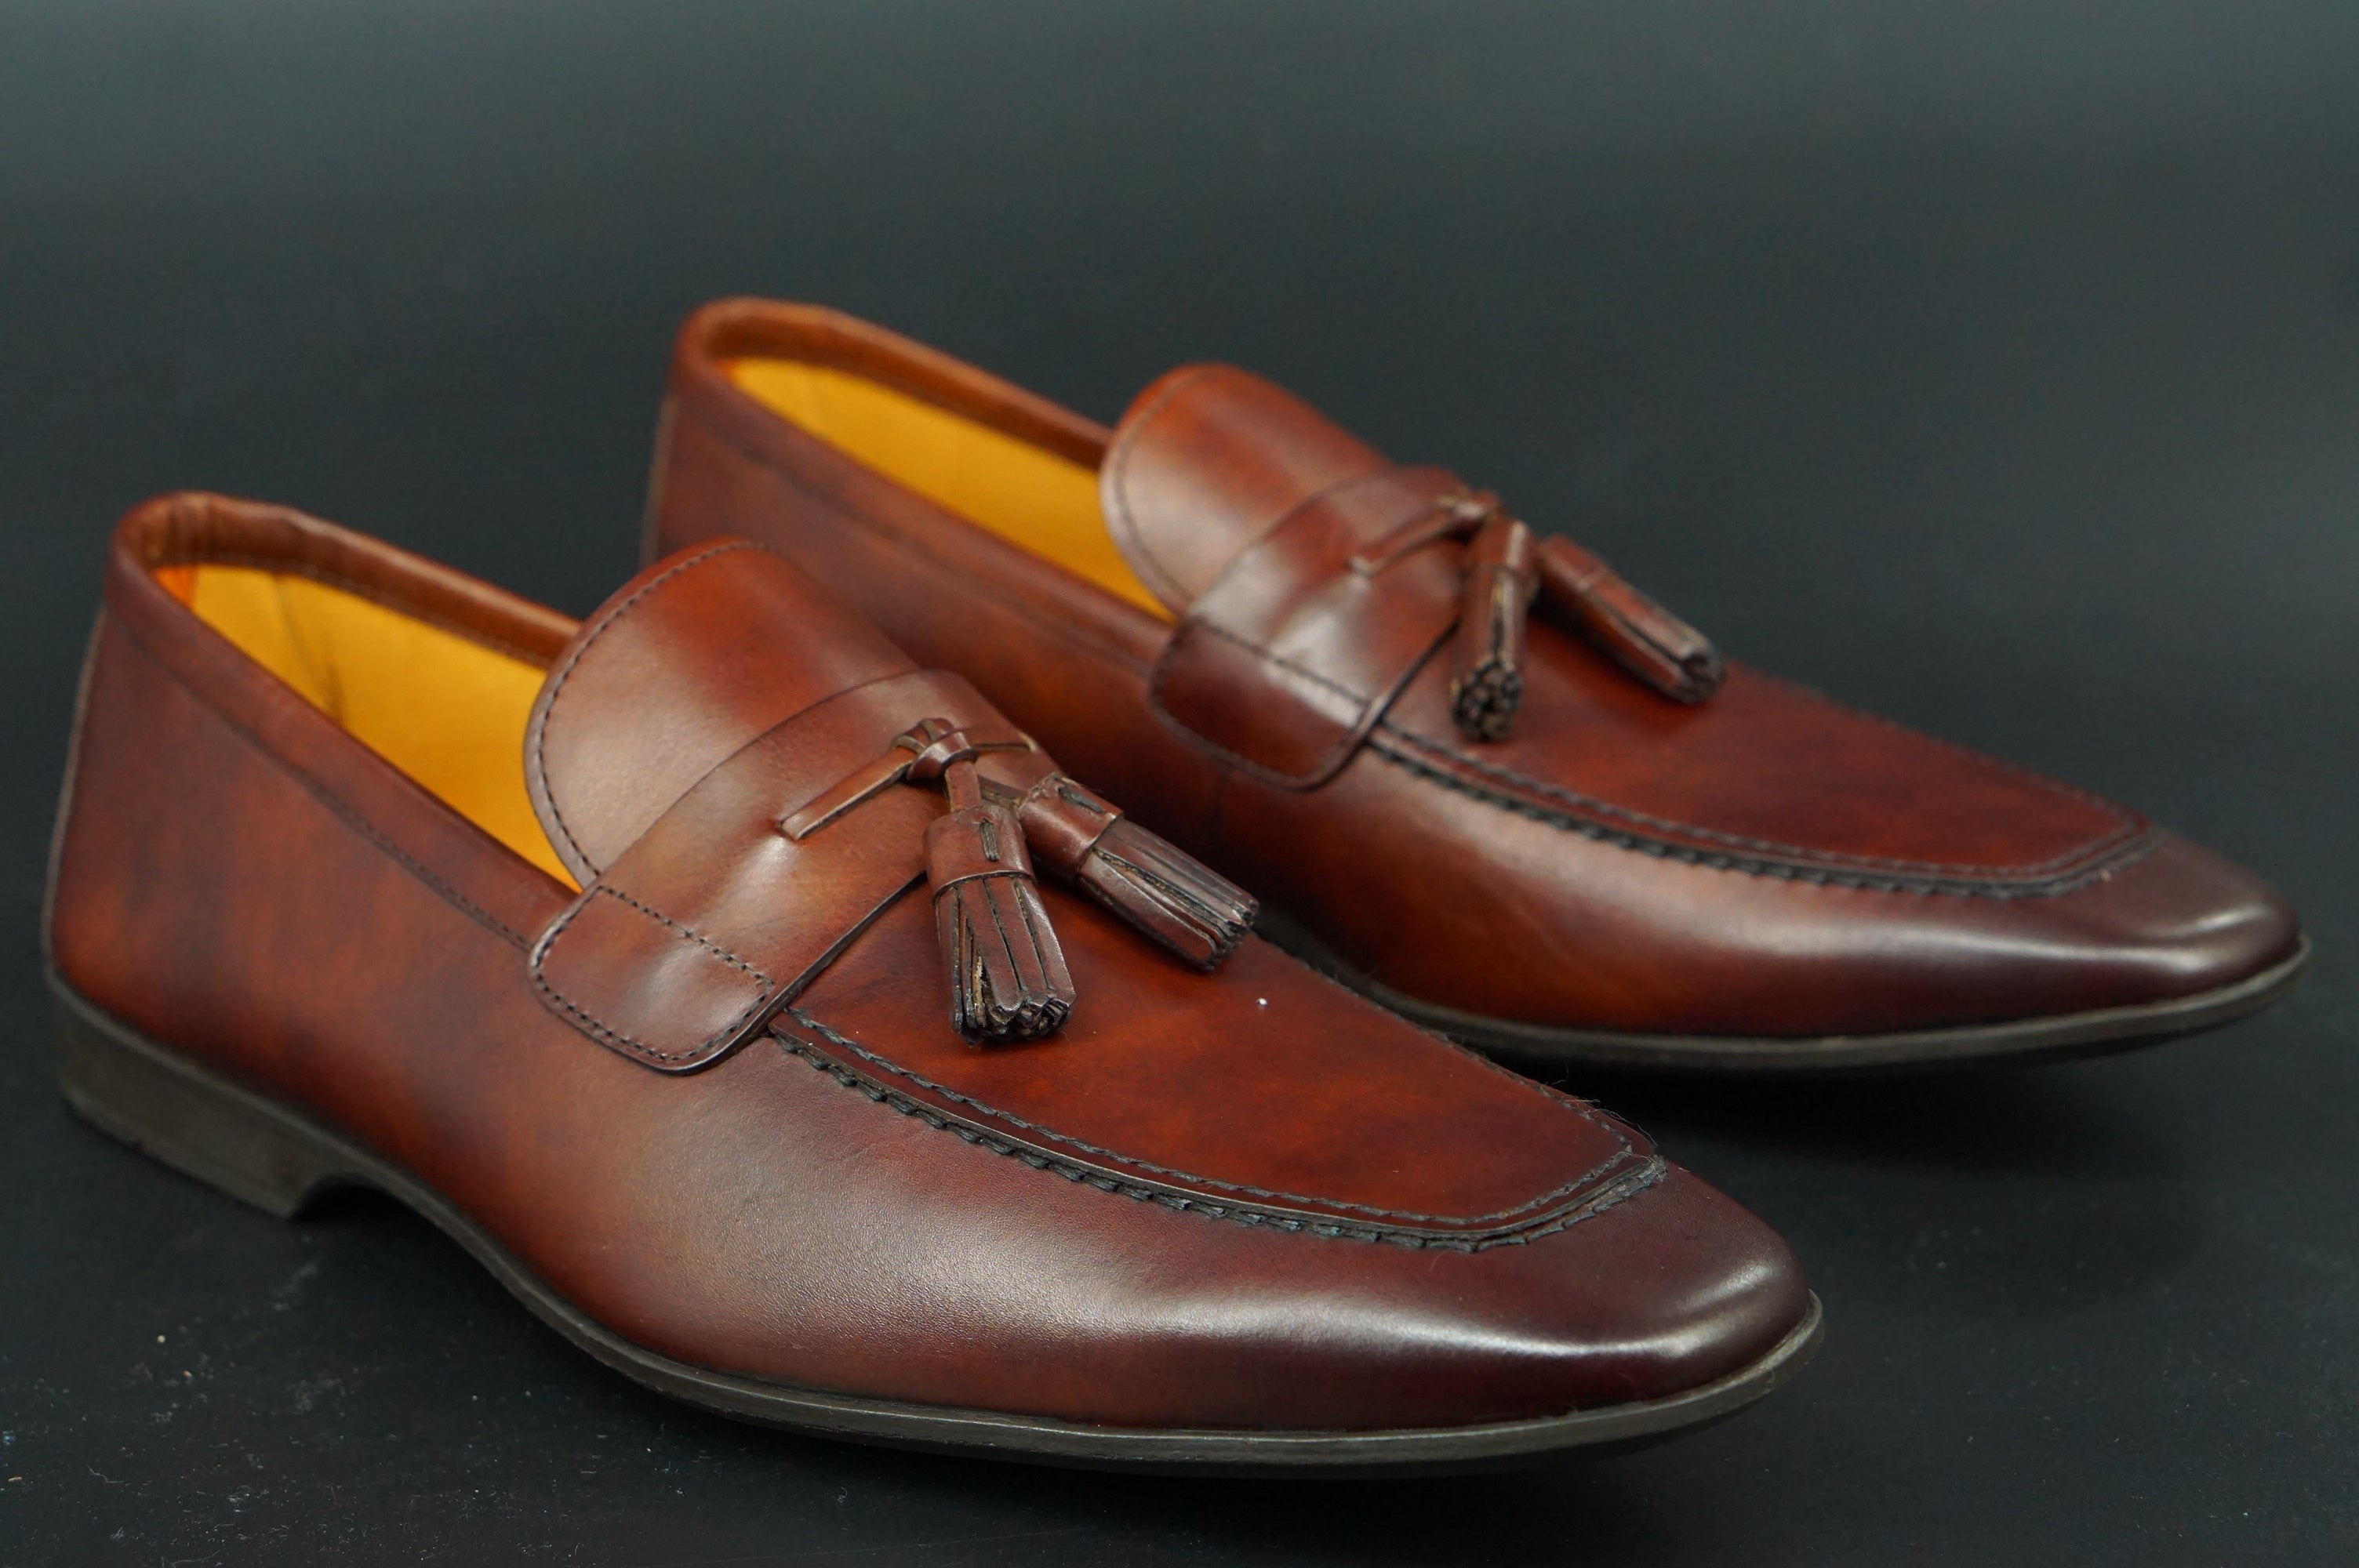 Magnanni Kamato Tassel Loafers SZ 9.5 Tobaco brown Leather $350 Slip On NIB